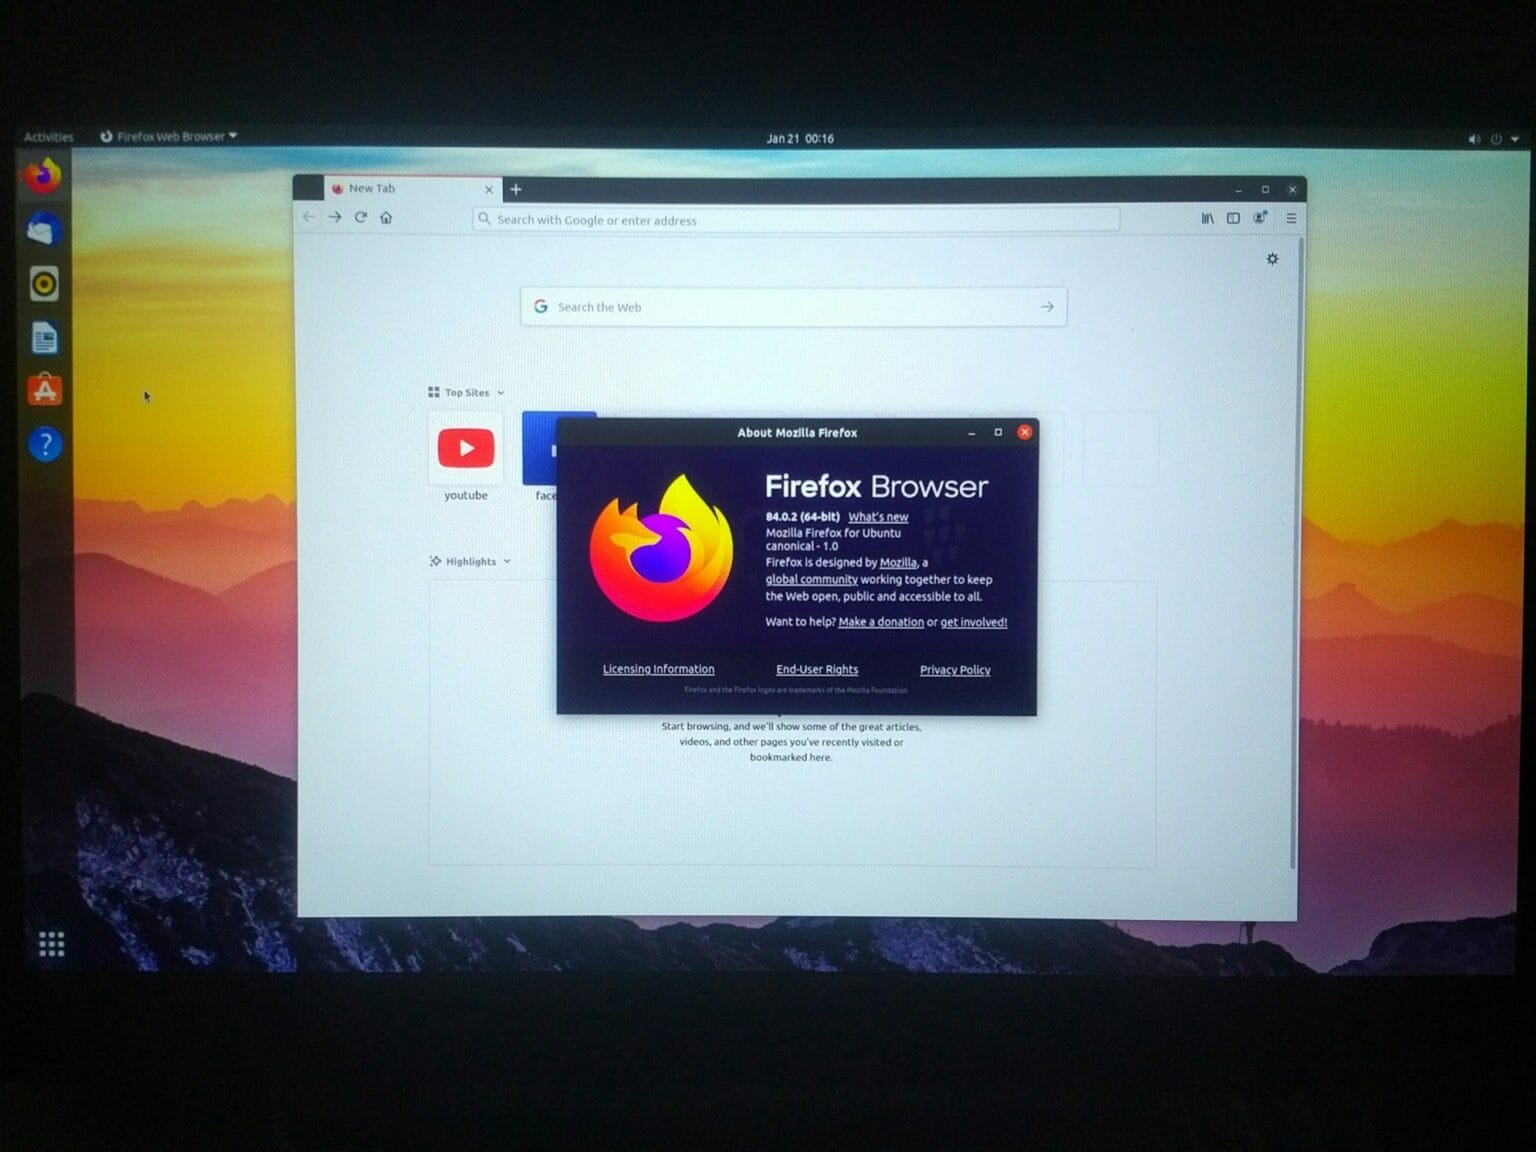 Linux on an M1 Mac